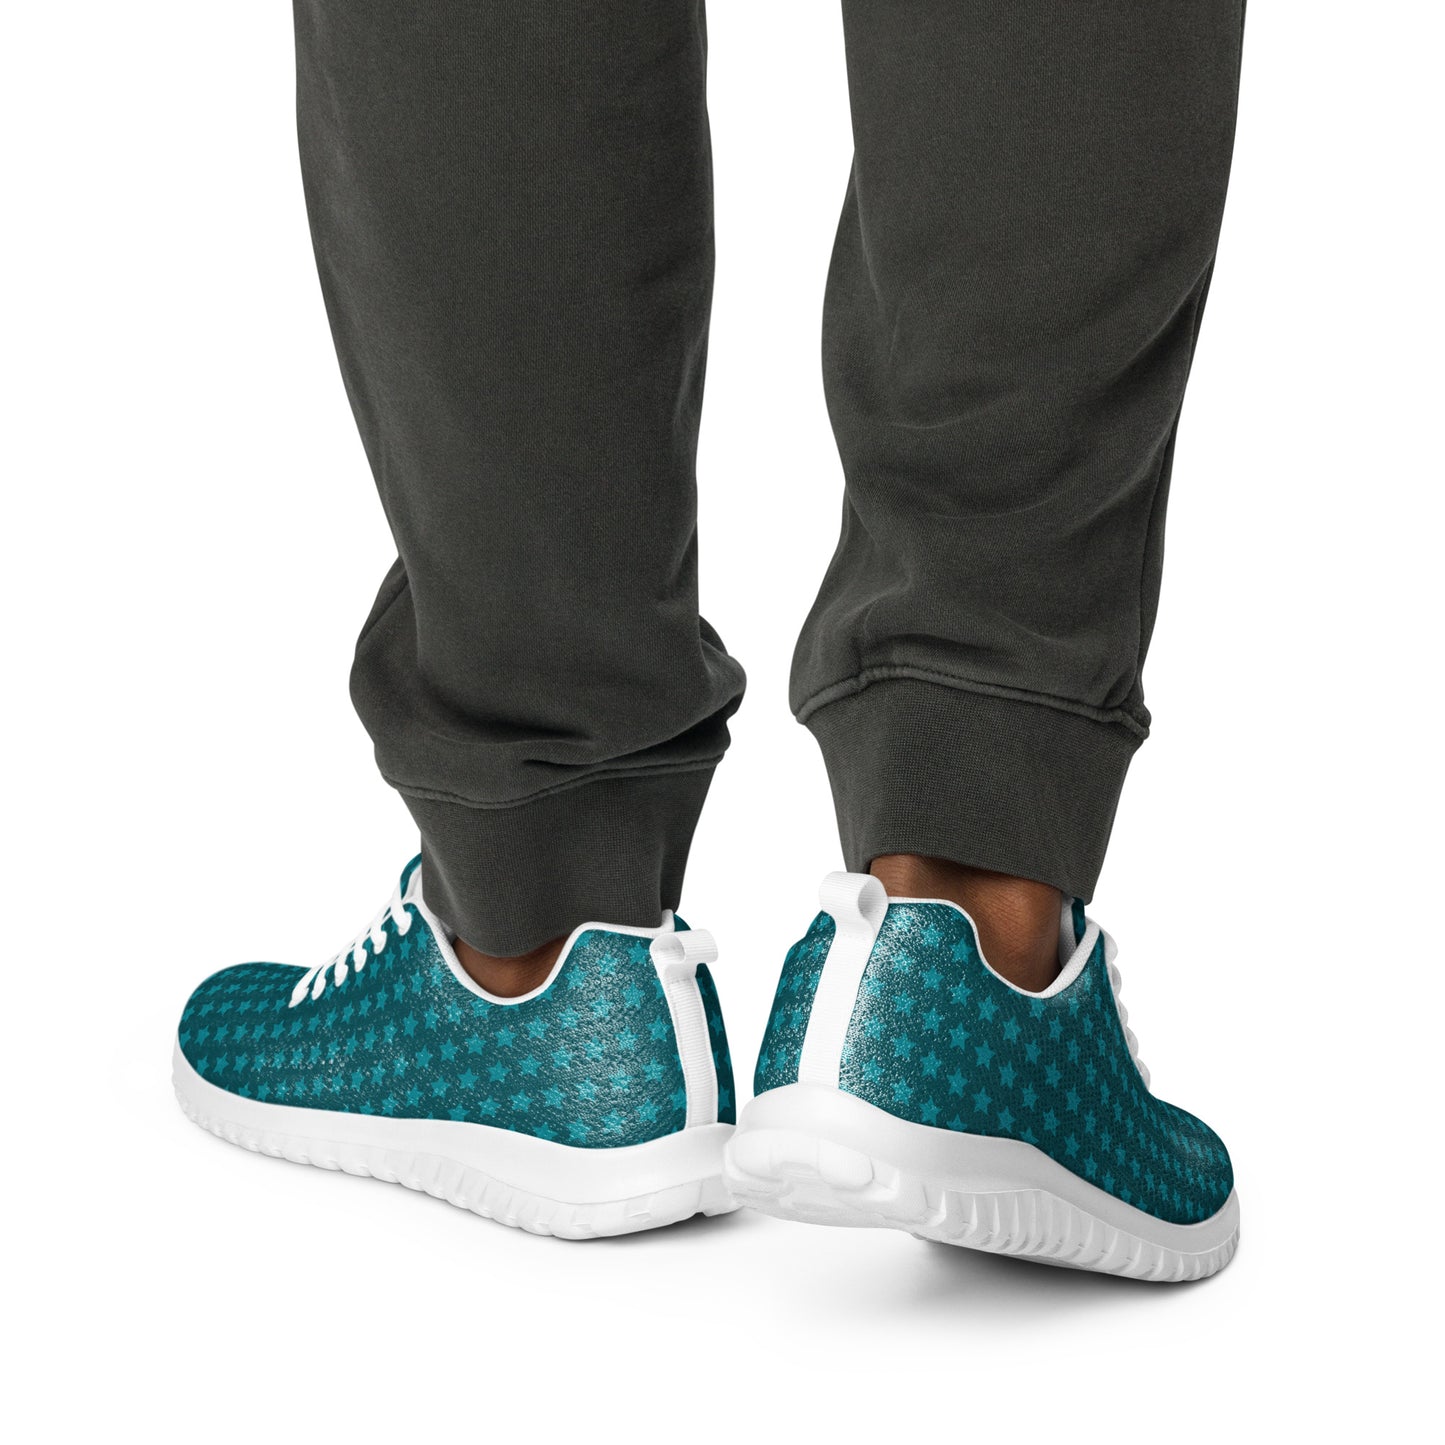 DASH Stars Green Men’s Athletic Shoes Lightweight Breathable Design by IOBI Original Apparel